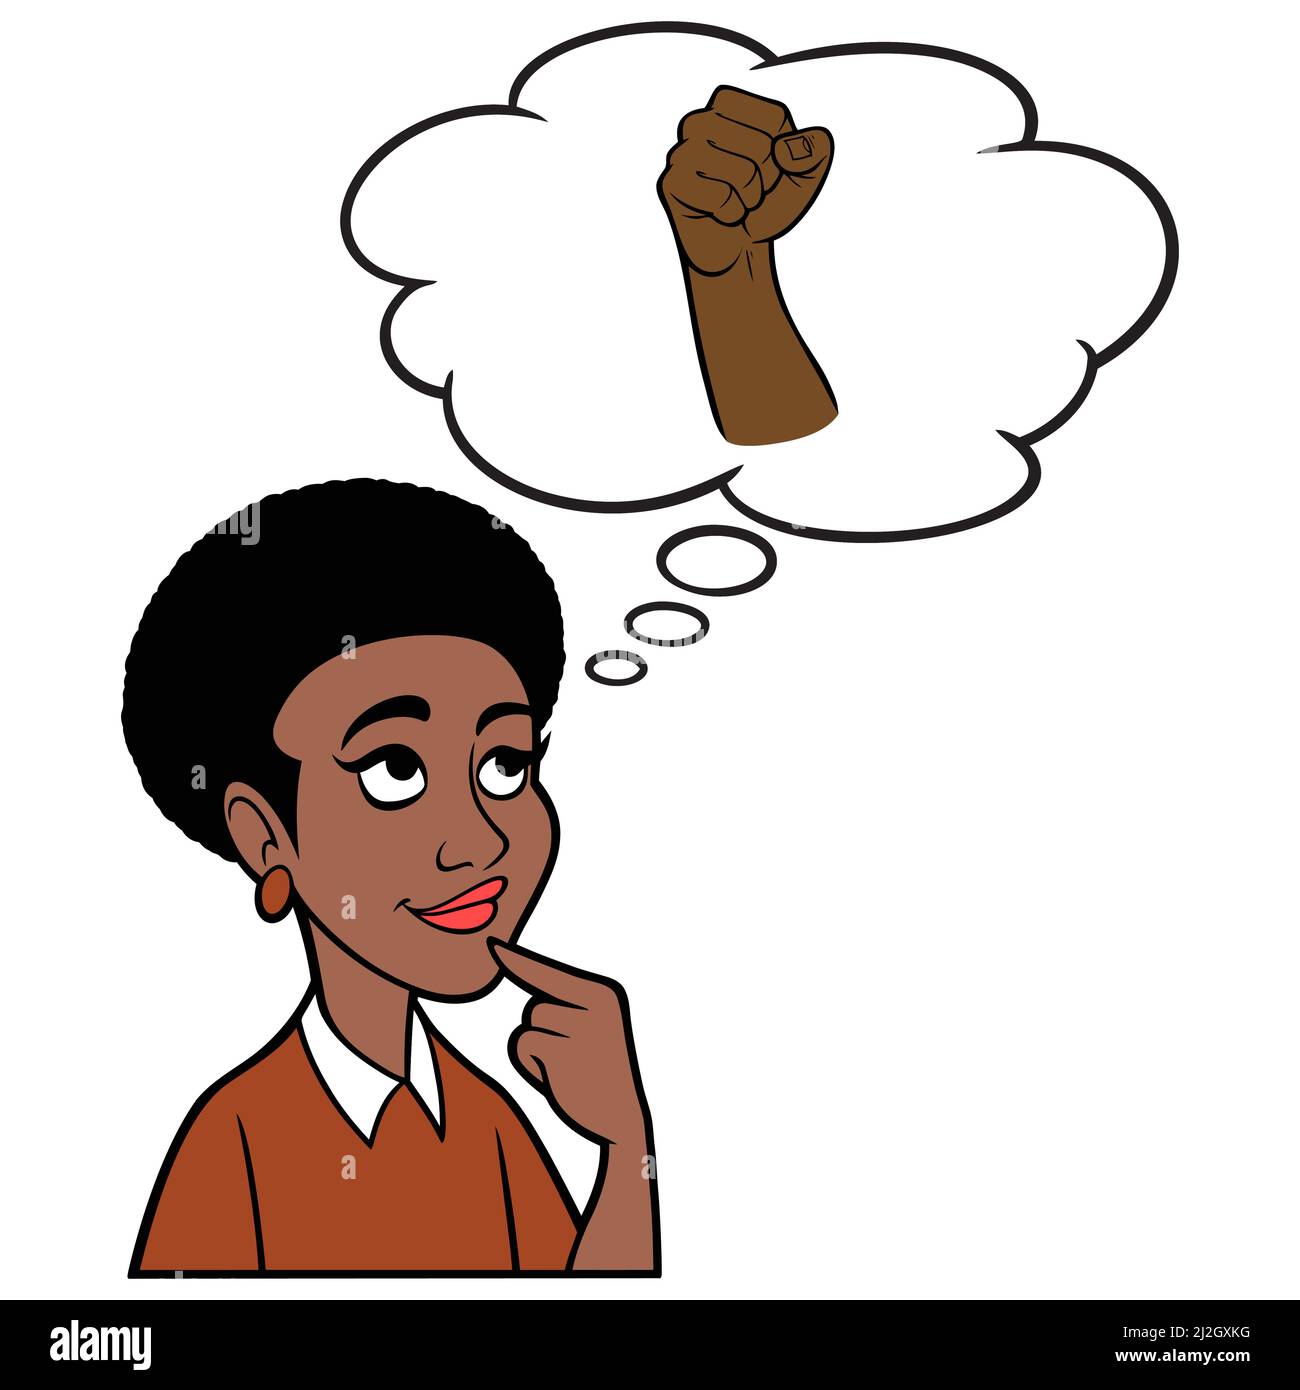 Black Woman Thinking About Revolution - un'illustrazione cartoon di una Black Woman Thinking About a Revolution Movement. Illustrazione Vettoriale